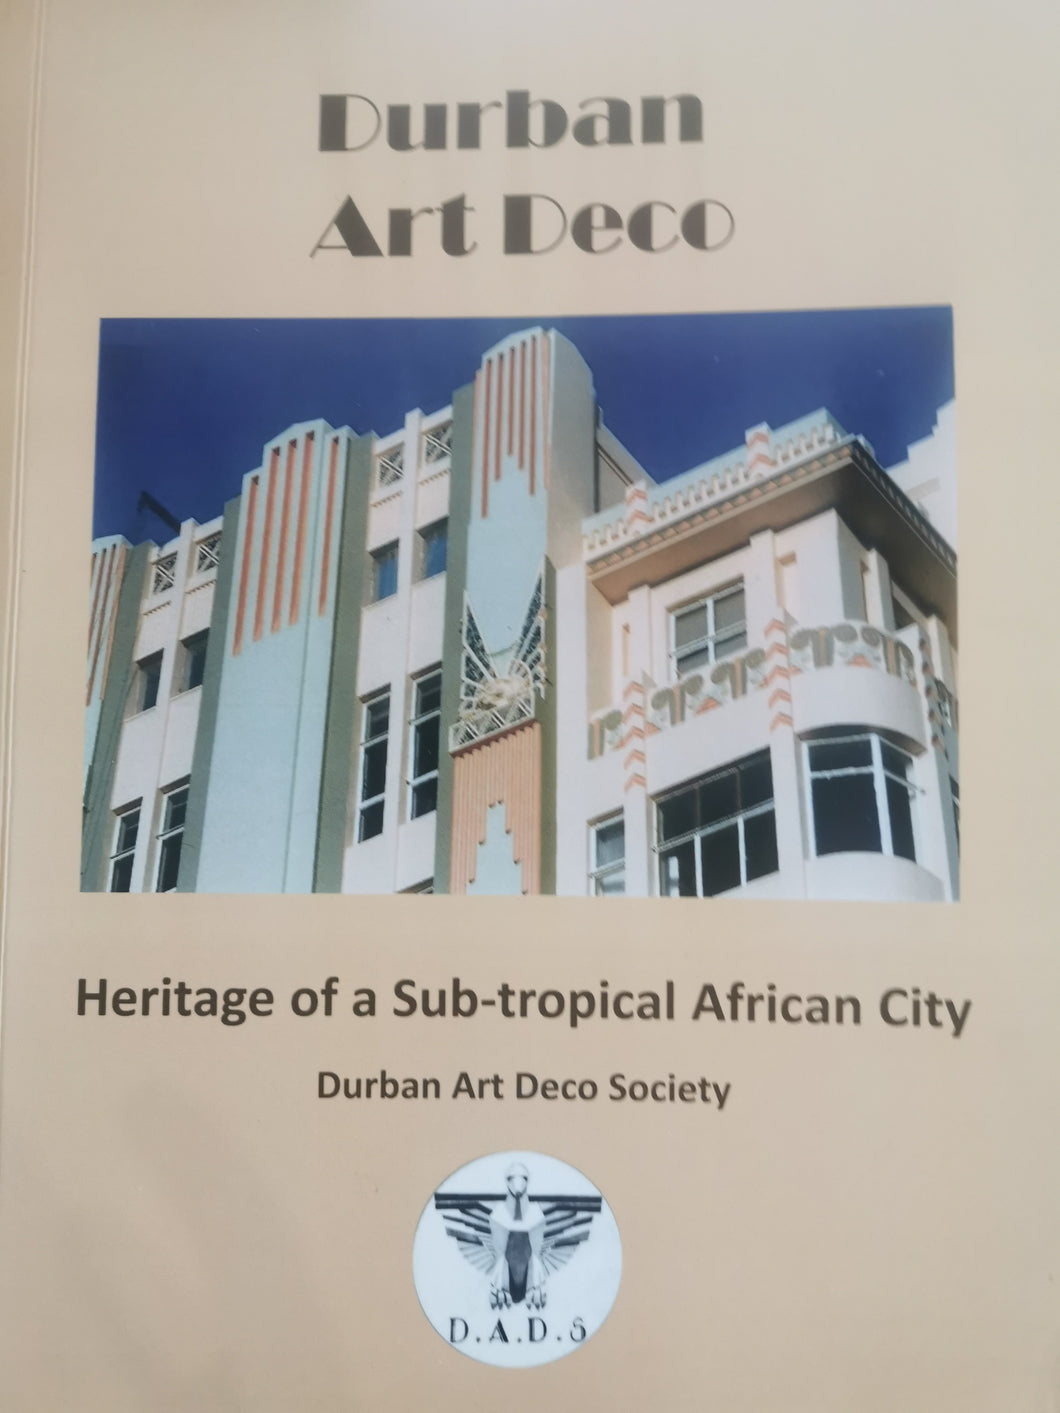 Durban Art Deco: Heritage of a Sub-tropical African City - Durban Art Deco Society